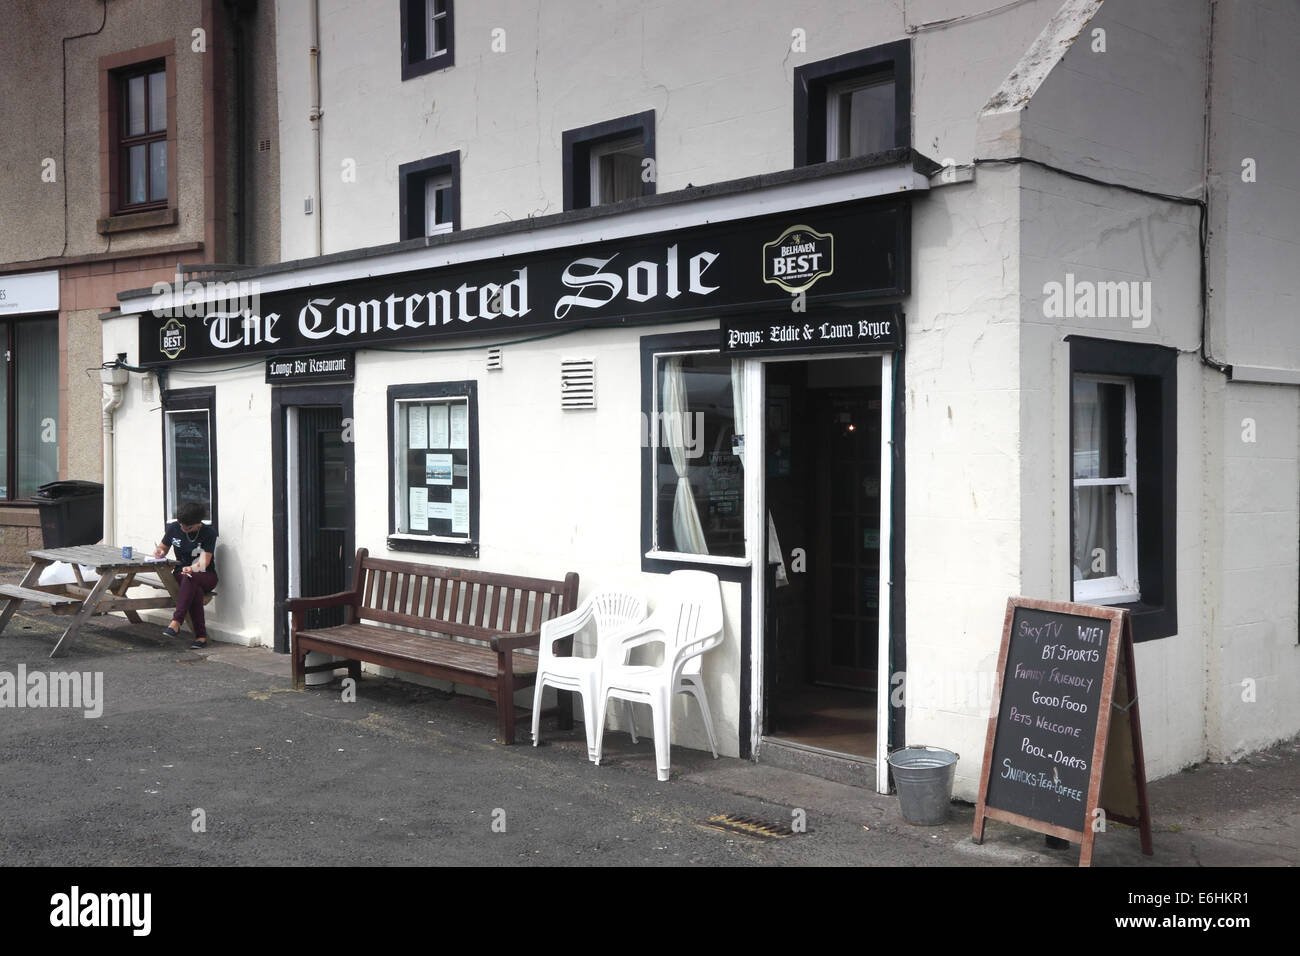 Restaurant with amusing name in Eyemouth, Berwickshire Scotland Stock Photo